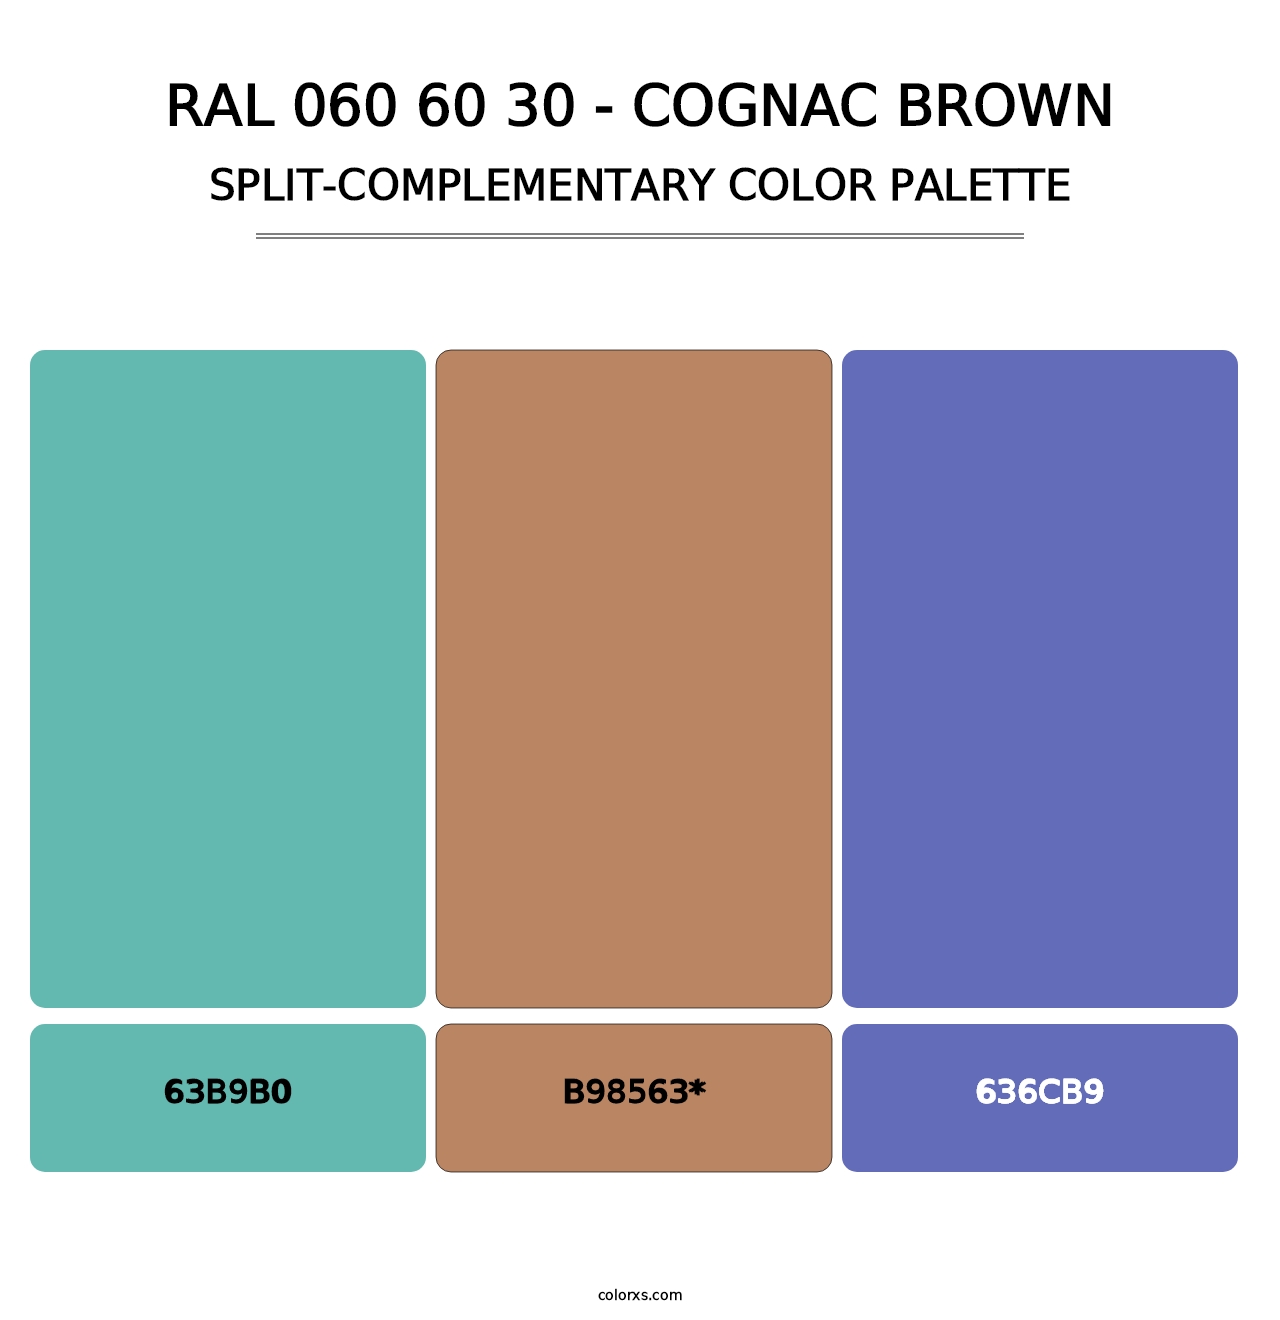 RAL 060 60 30 - Cognac Brown - Split-Complementary Color Palette